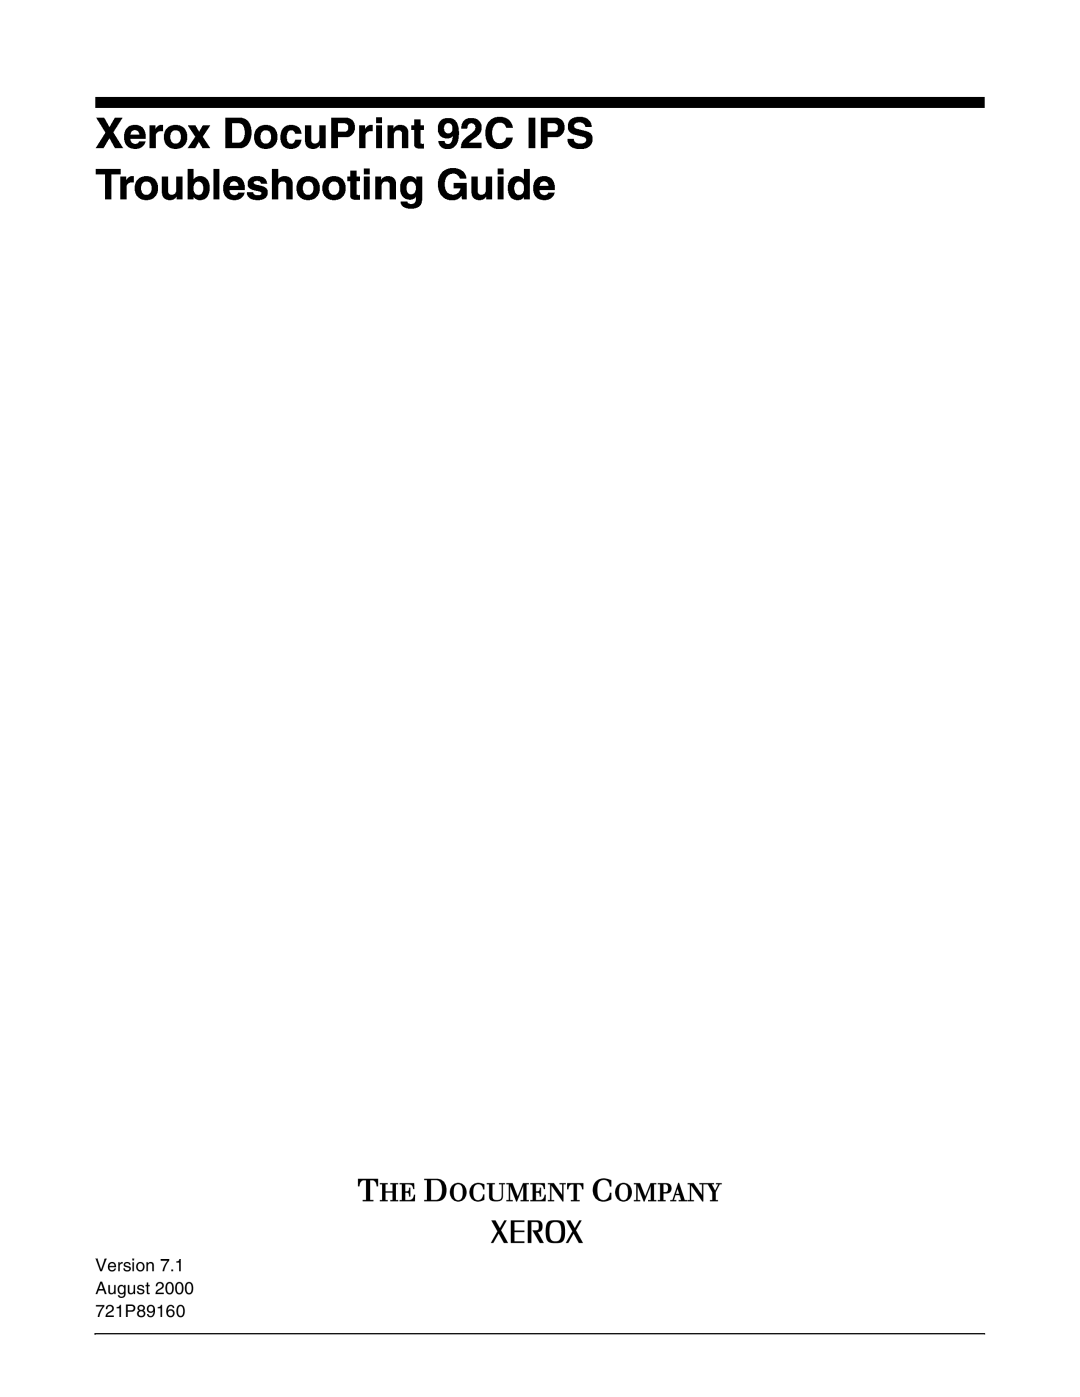 Xerox manual Xerox DocuPrint 92C IPS Troubleshooting Guide, Version 7.1 August 2000 721P89160 